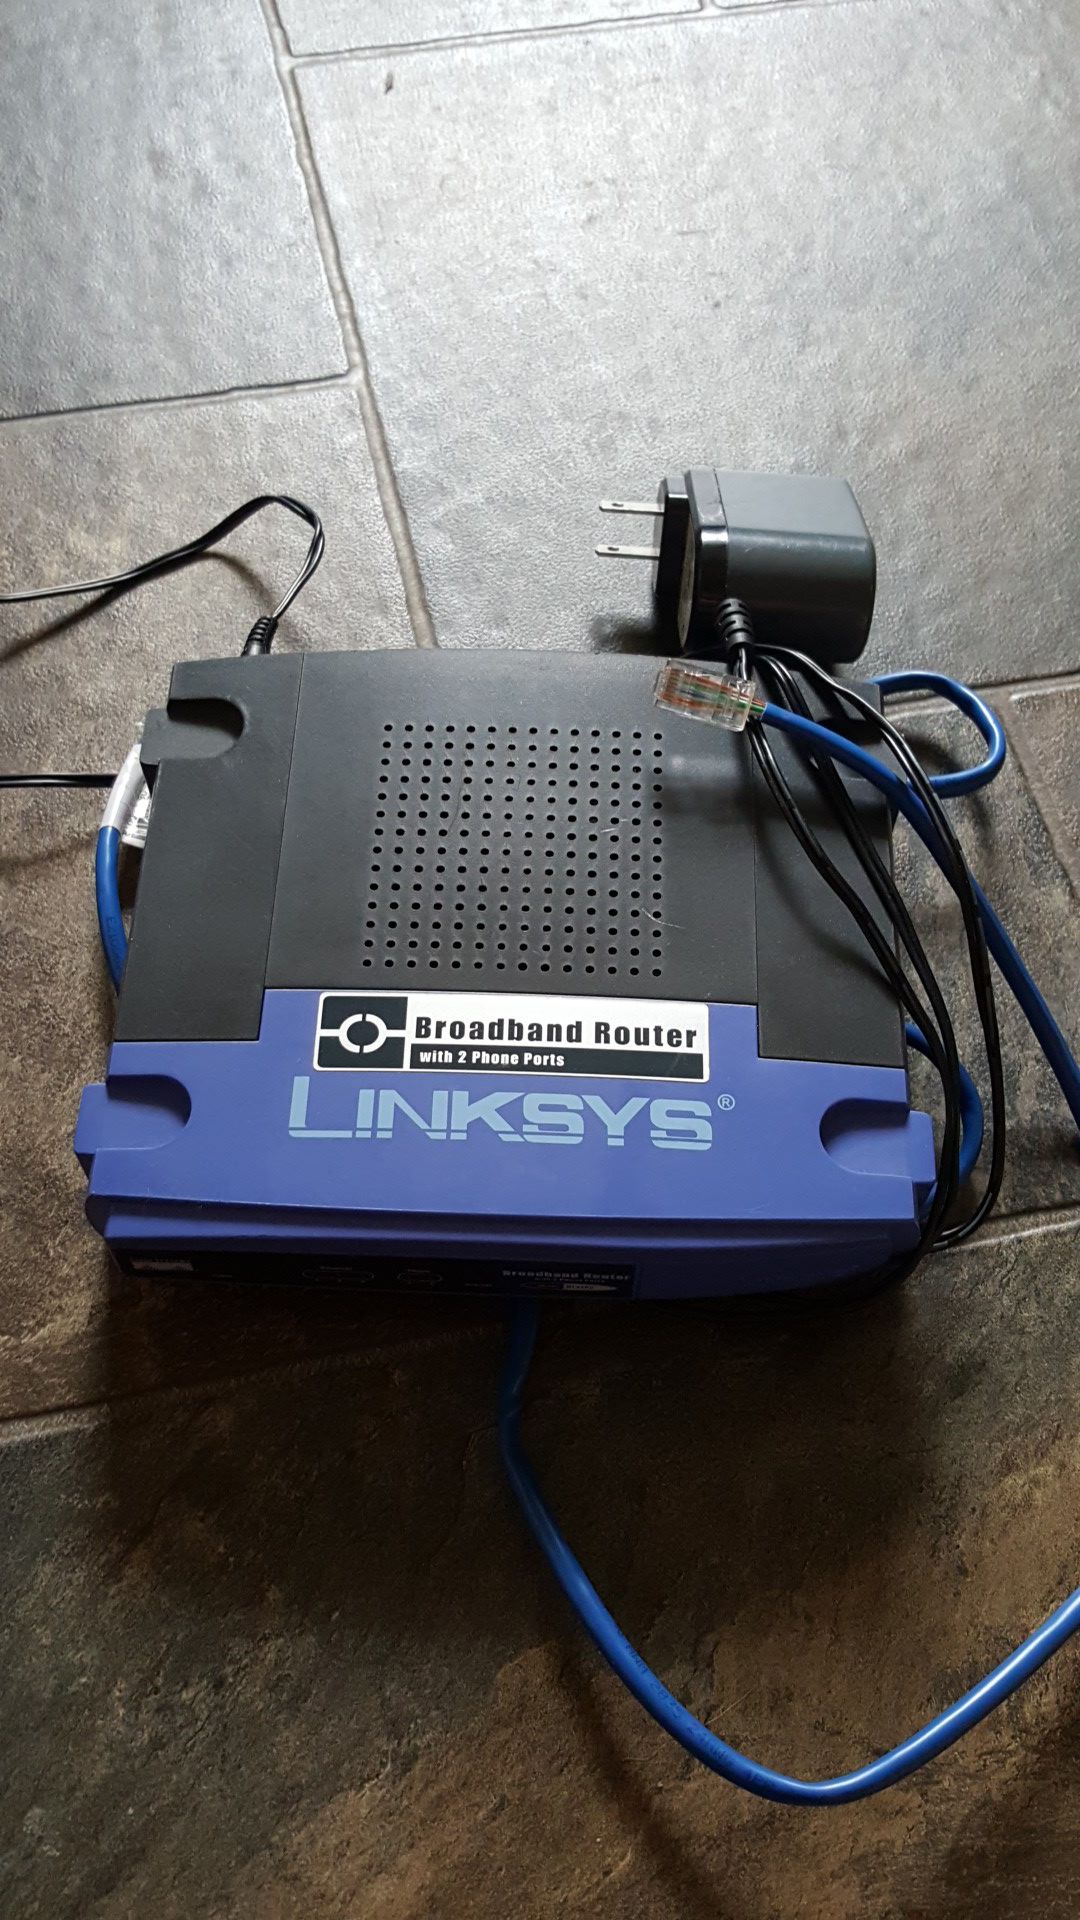 Linksys broadband router